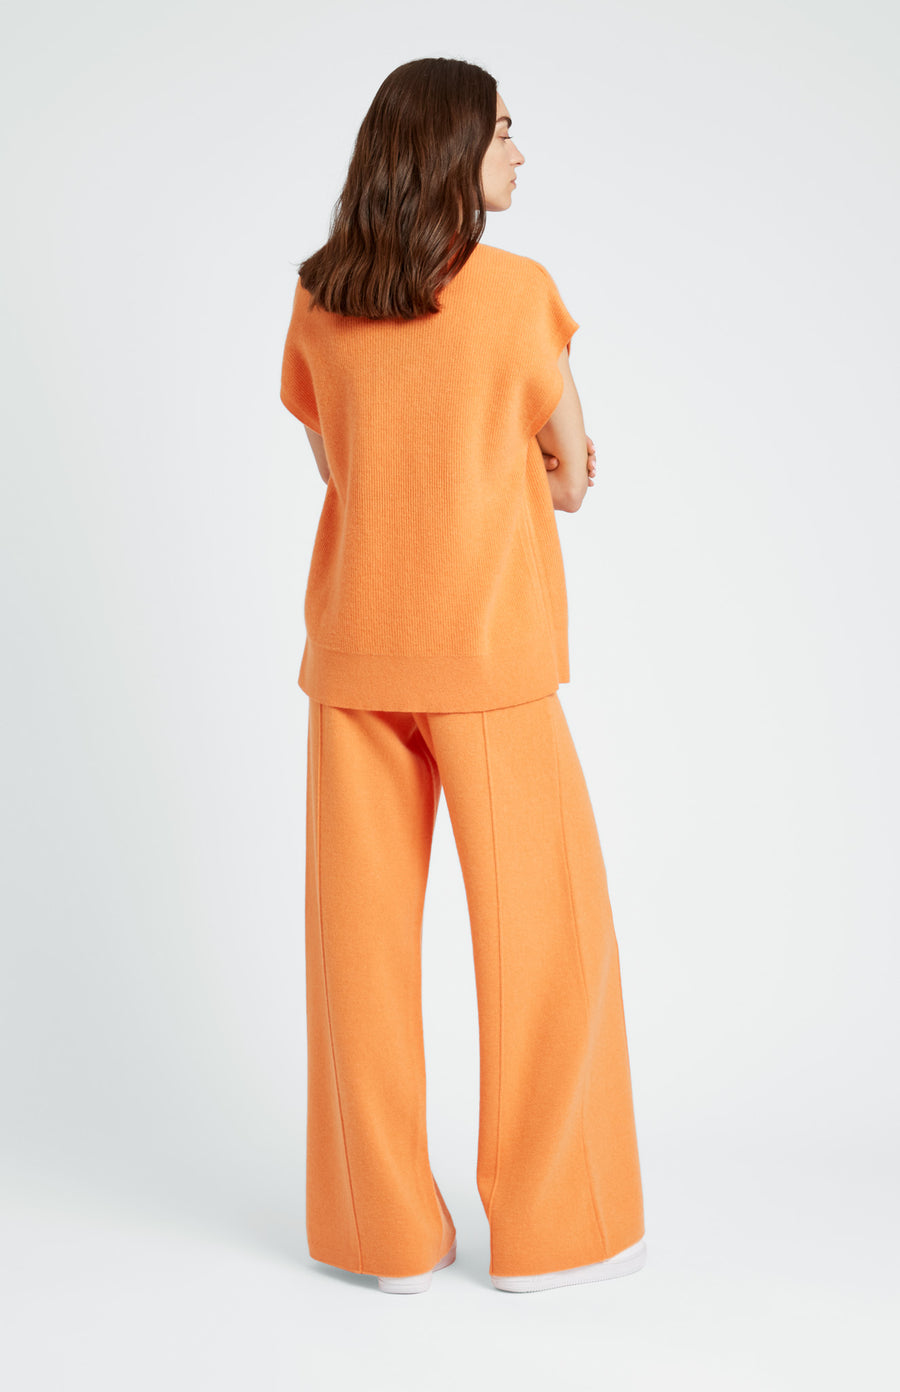 Stylish Zara Burnt Orange High Waist Flare Pants - Size XS